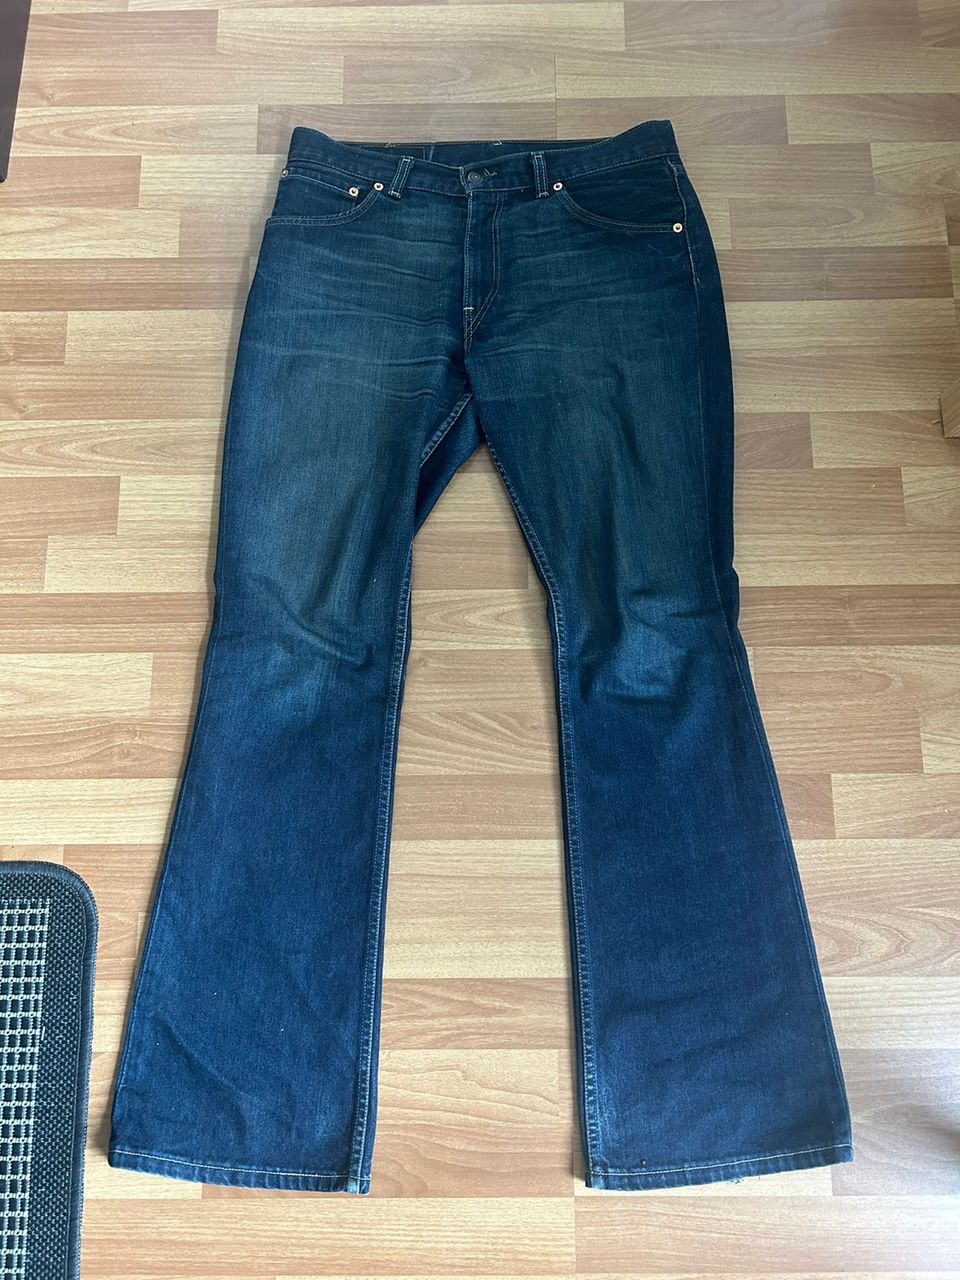 Levi’s bootcut jeans